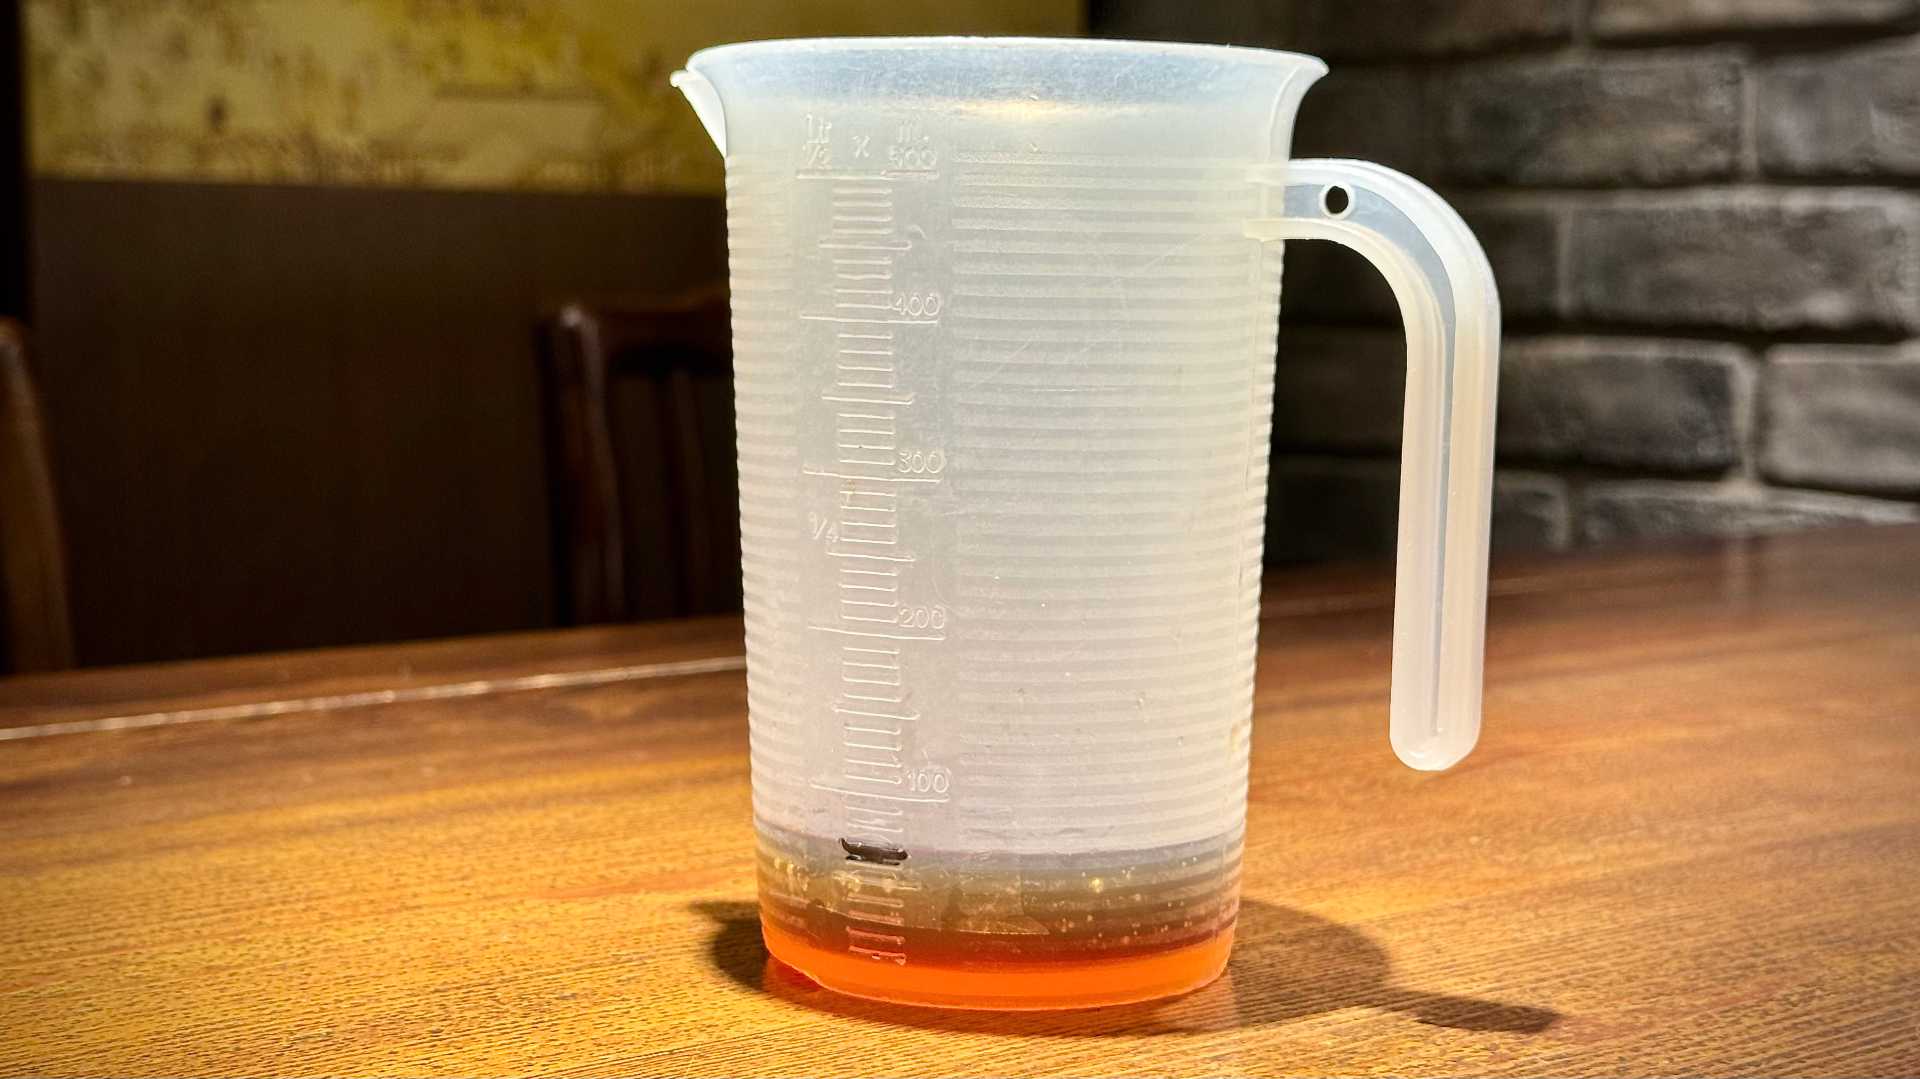 70mL of black tea in a measuring jug.